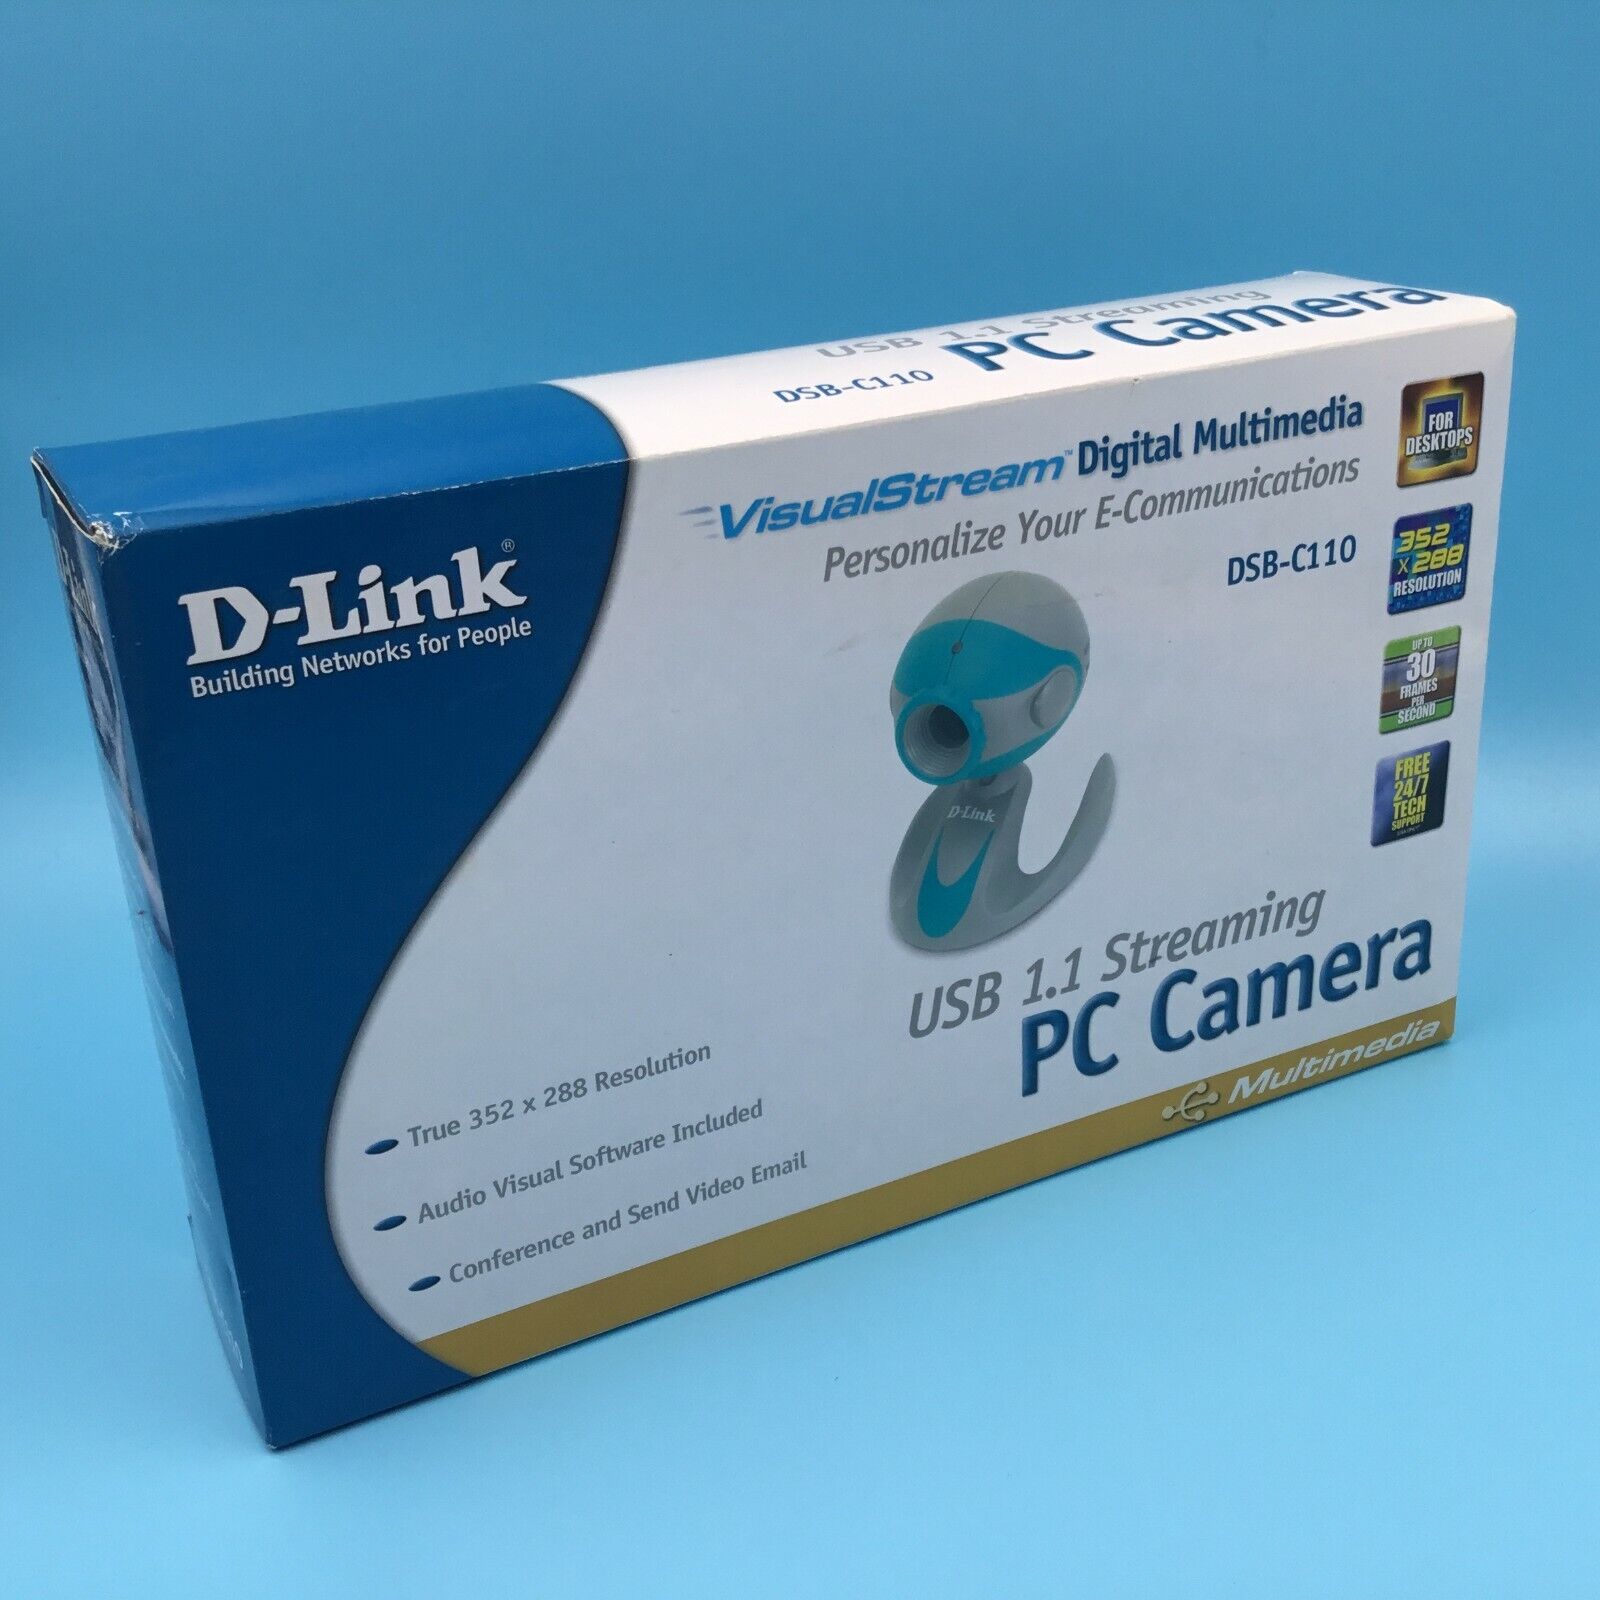 D-Link DSB-C110 VisualStream30 FPS USB 1.1 Streaming PC Web Cam/Camera NIB